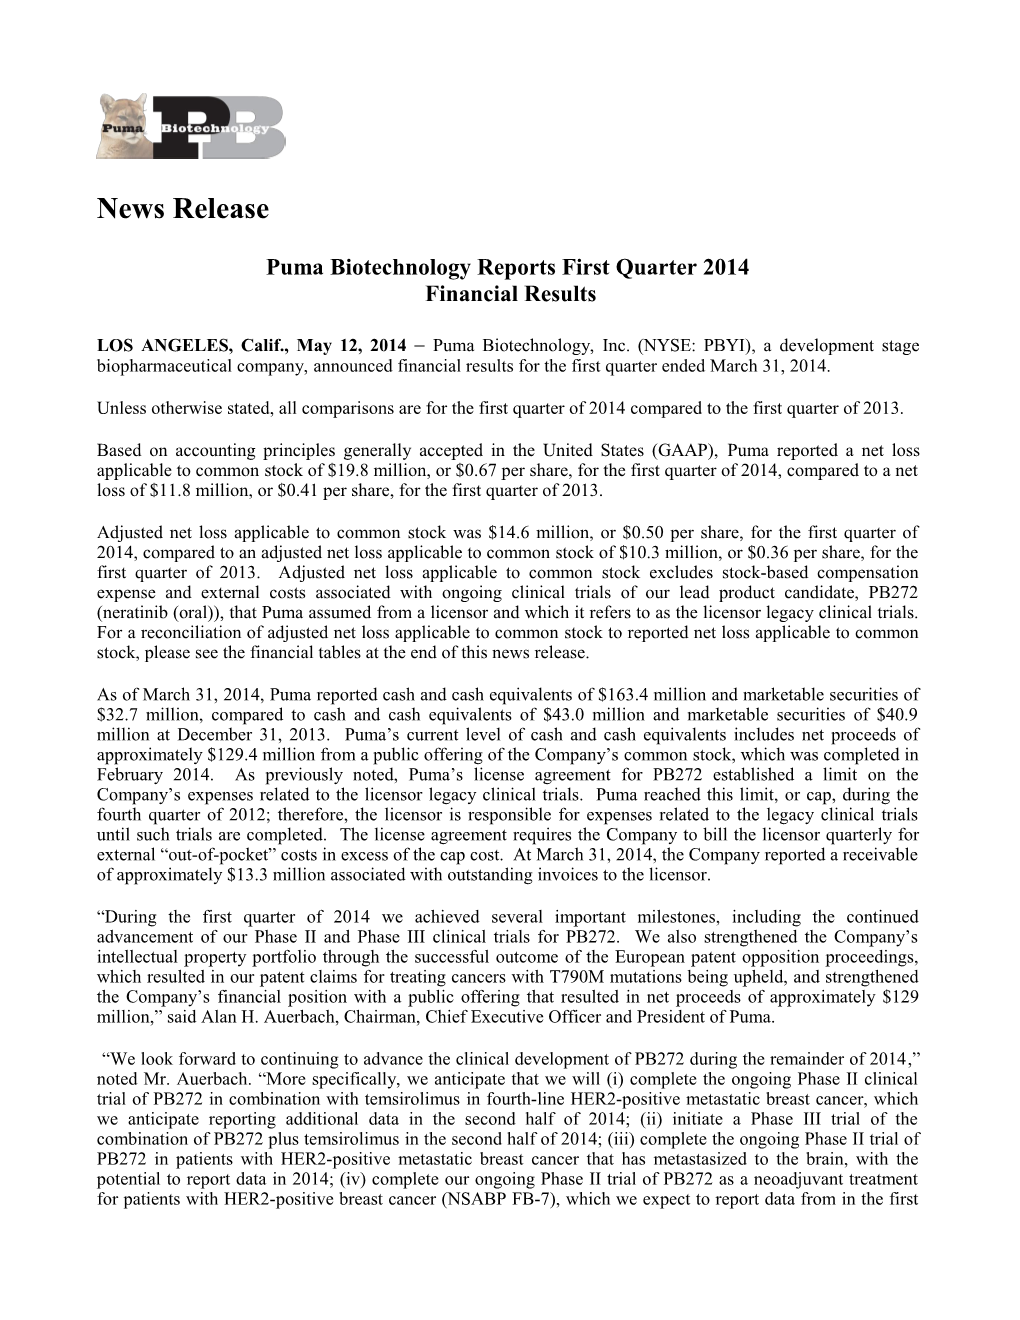 Puma Biotechnology Reports First Quarter 2014